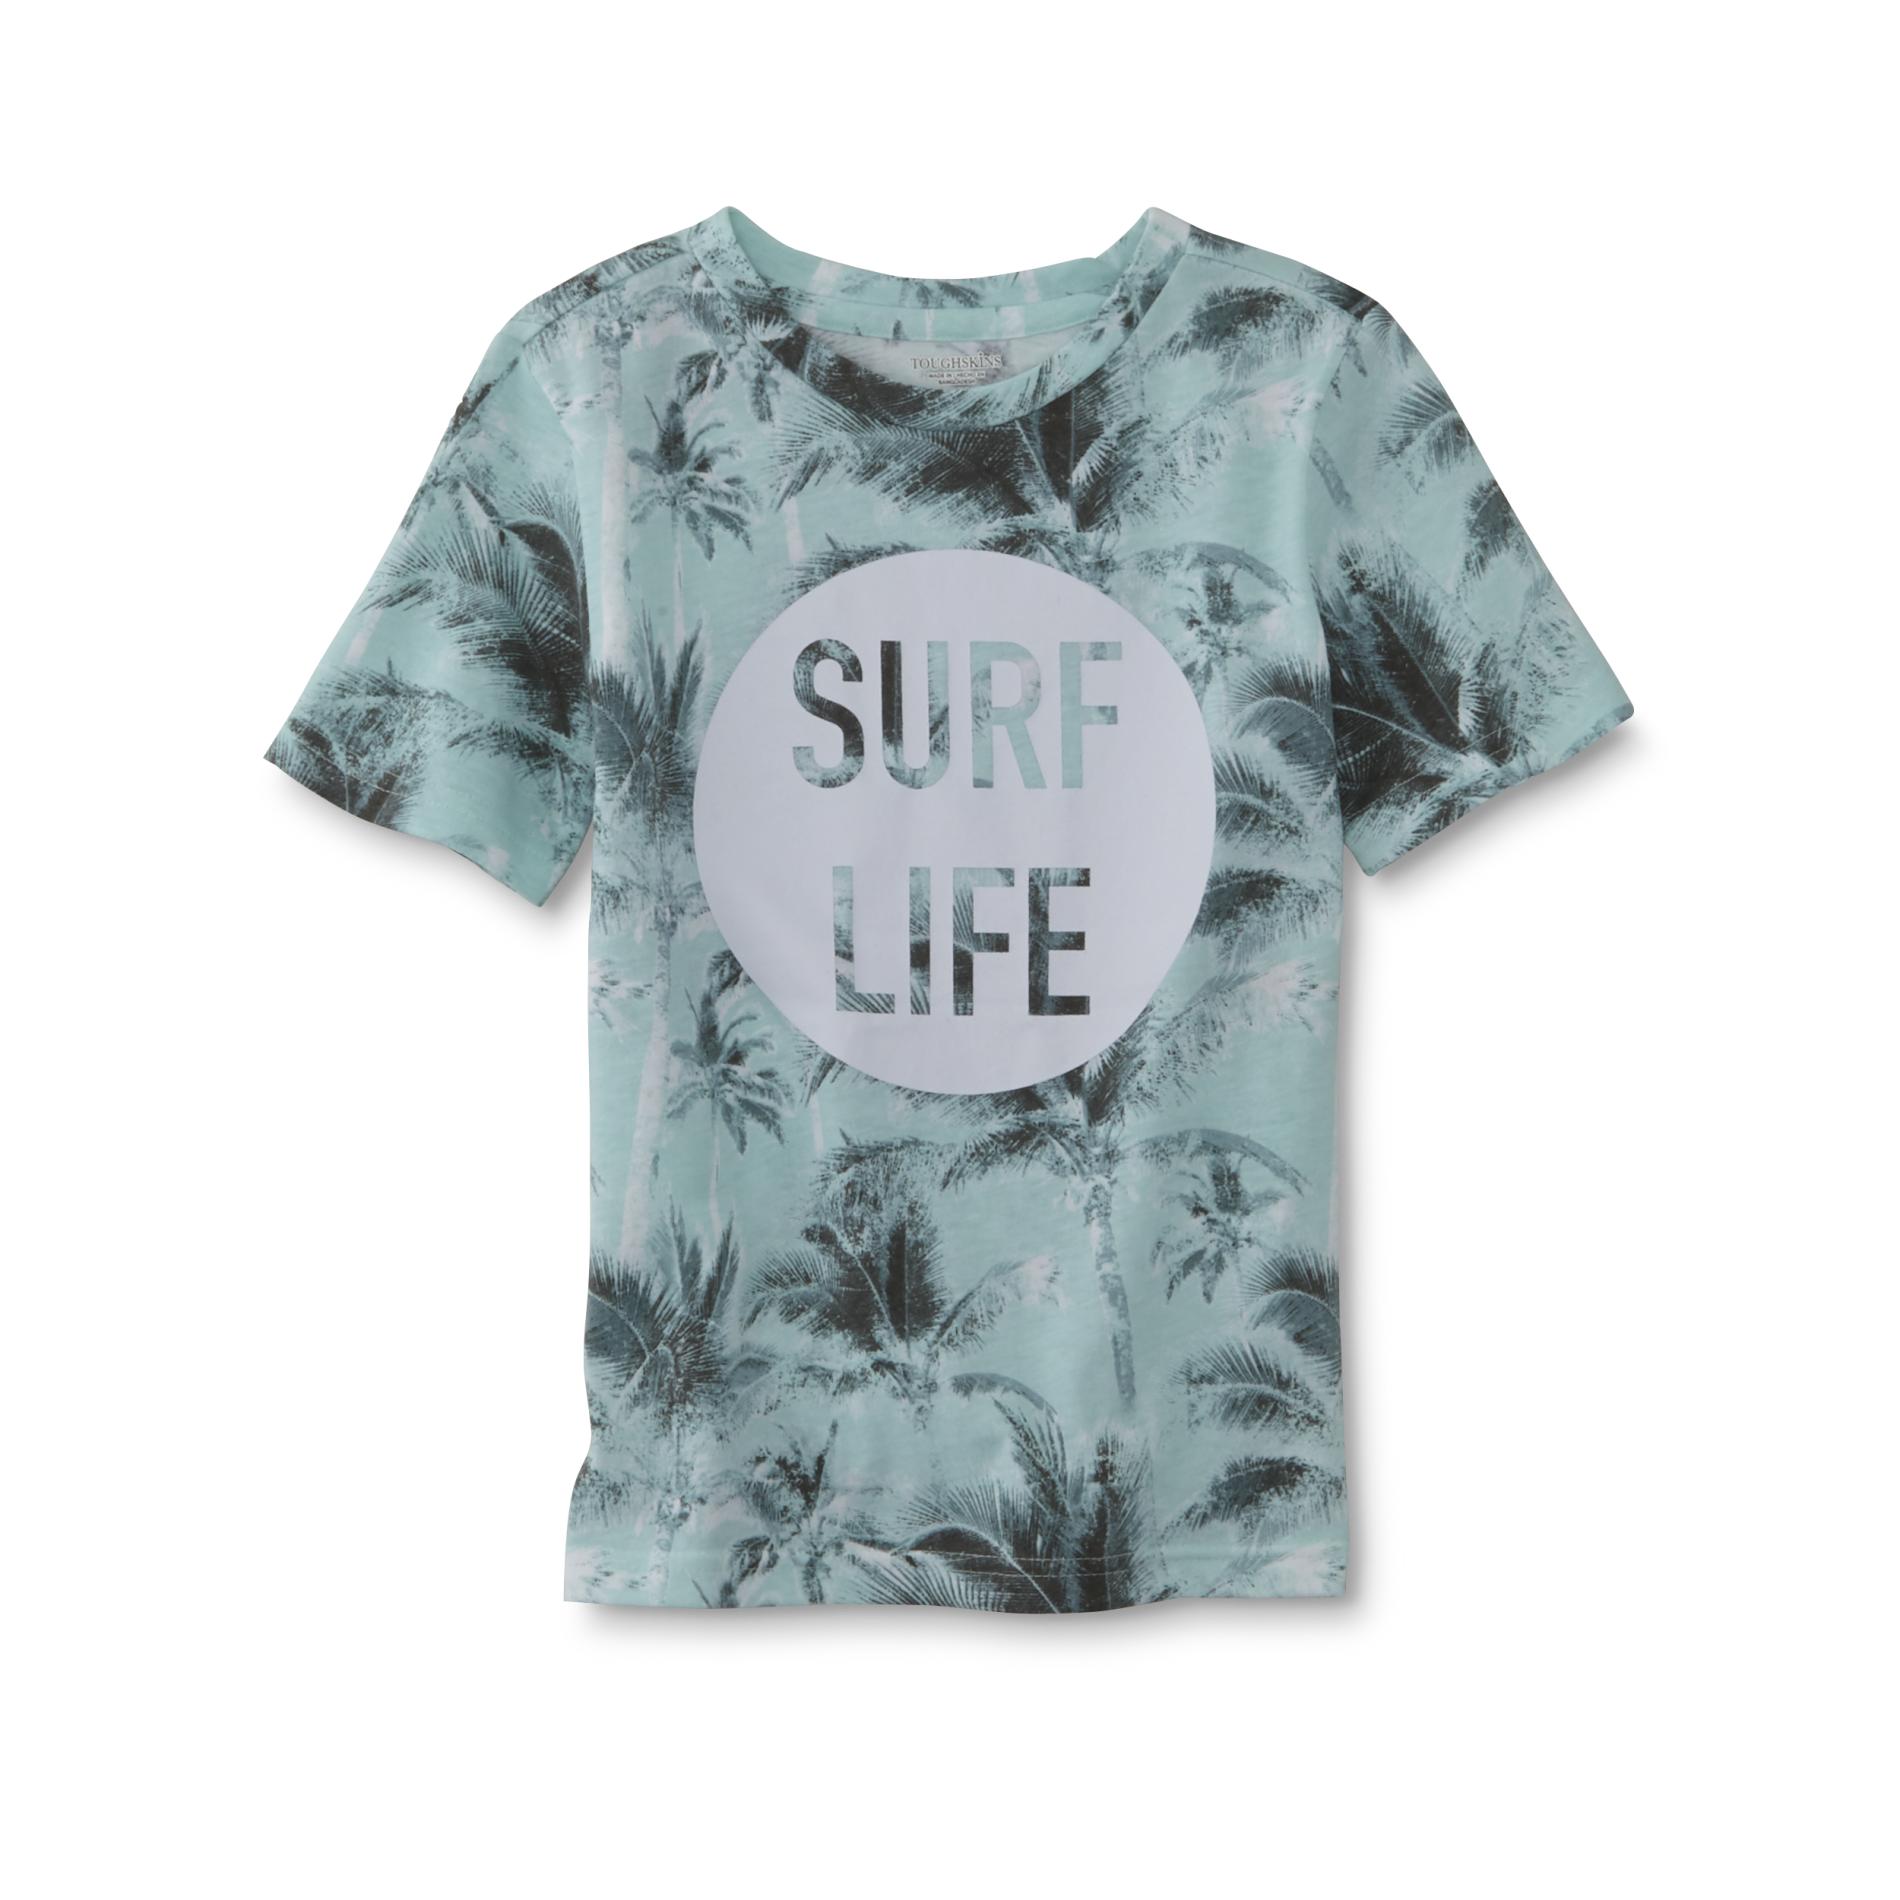 Toughskins Infant & Toddler Boys' Graphic T-Shirt - Surf Life